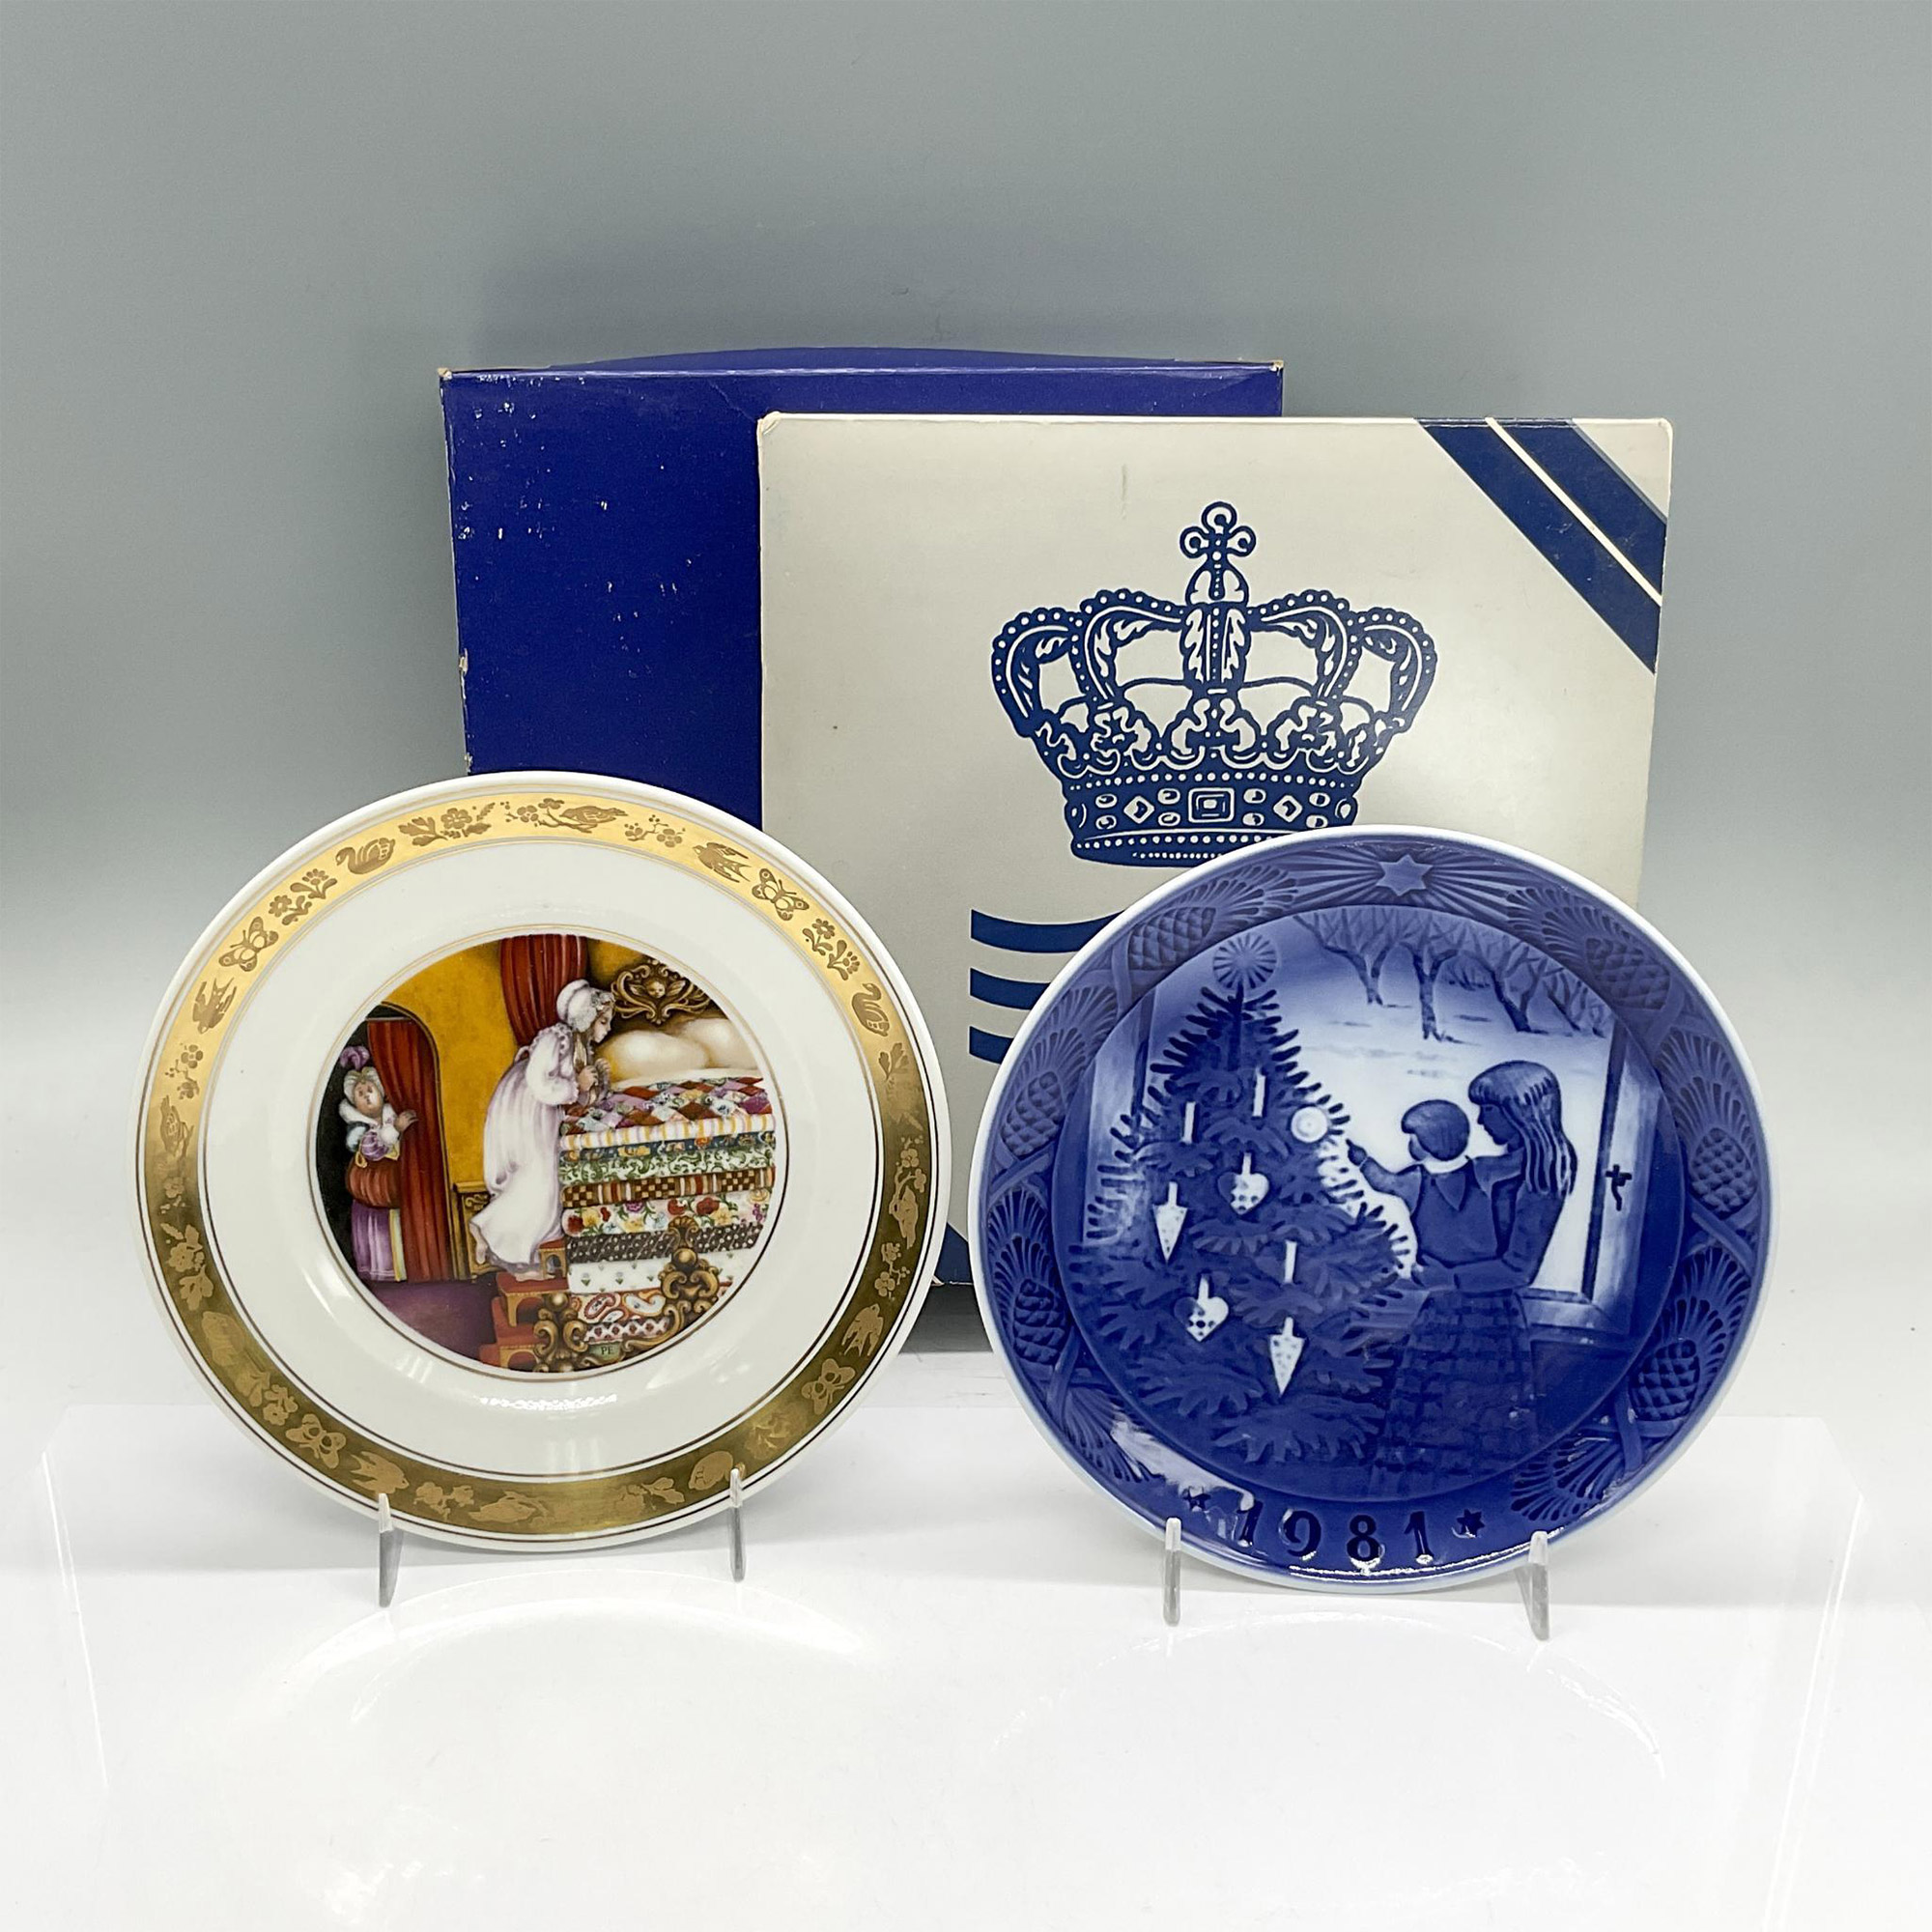 2pc Royal Copenhagen Plates, Hans Christian Andersen - Image 3 of 3